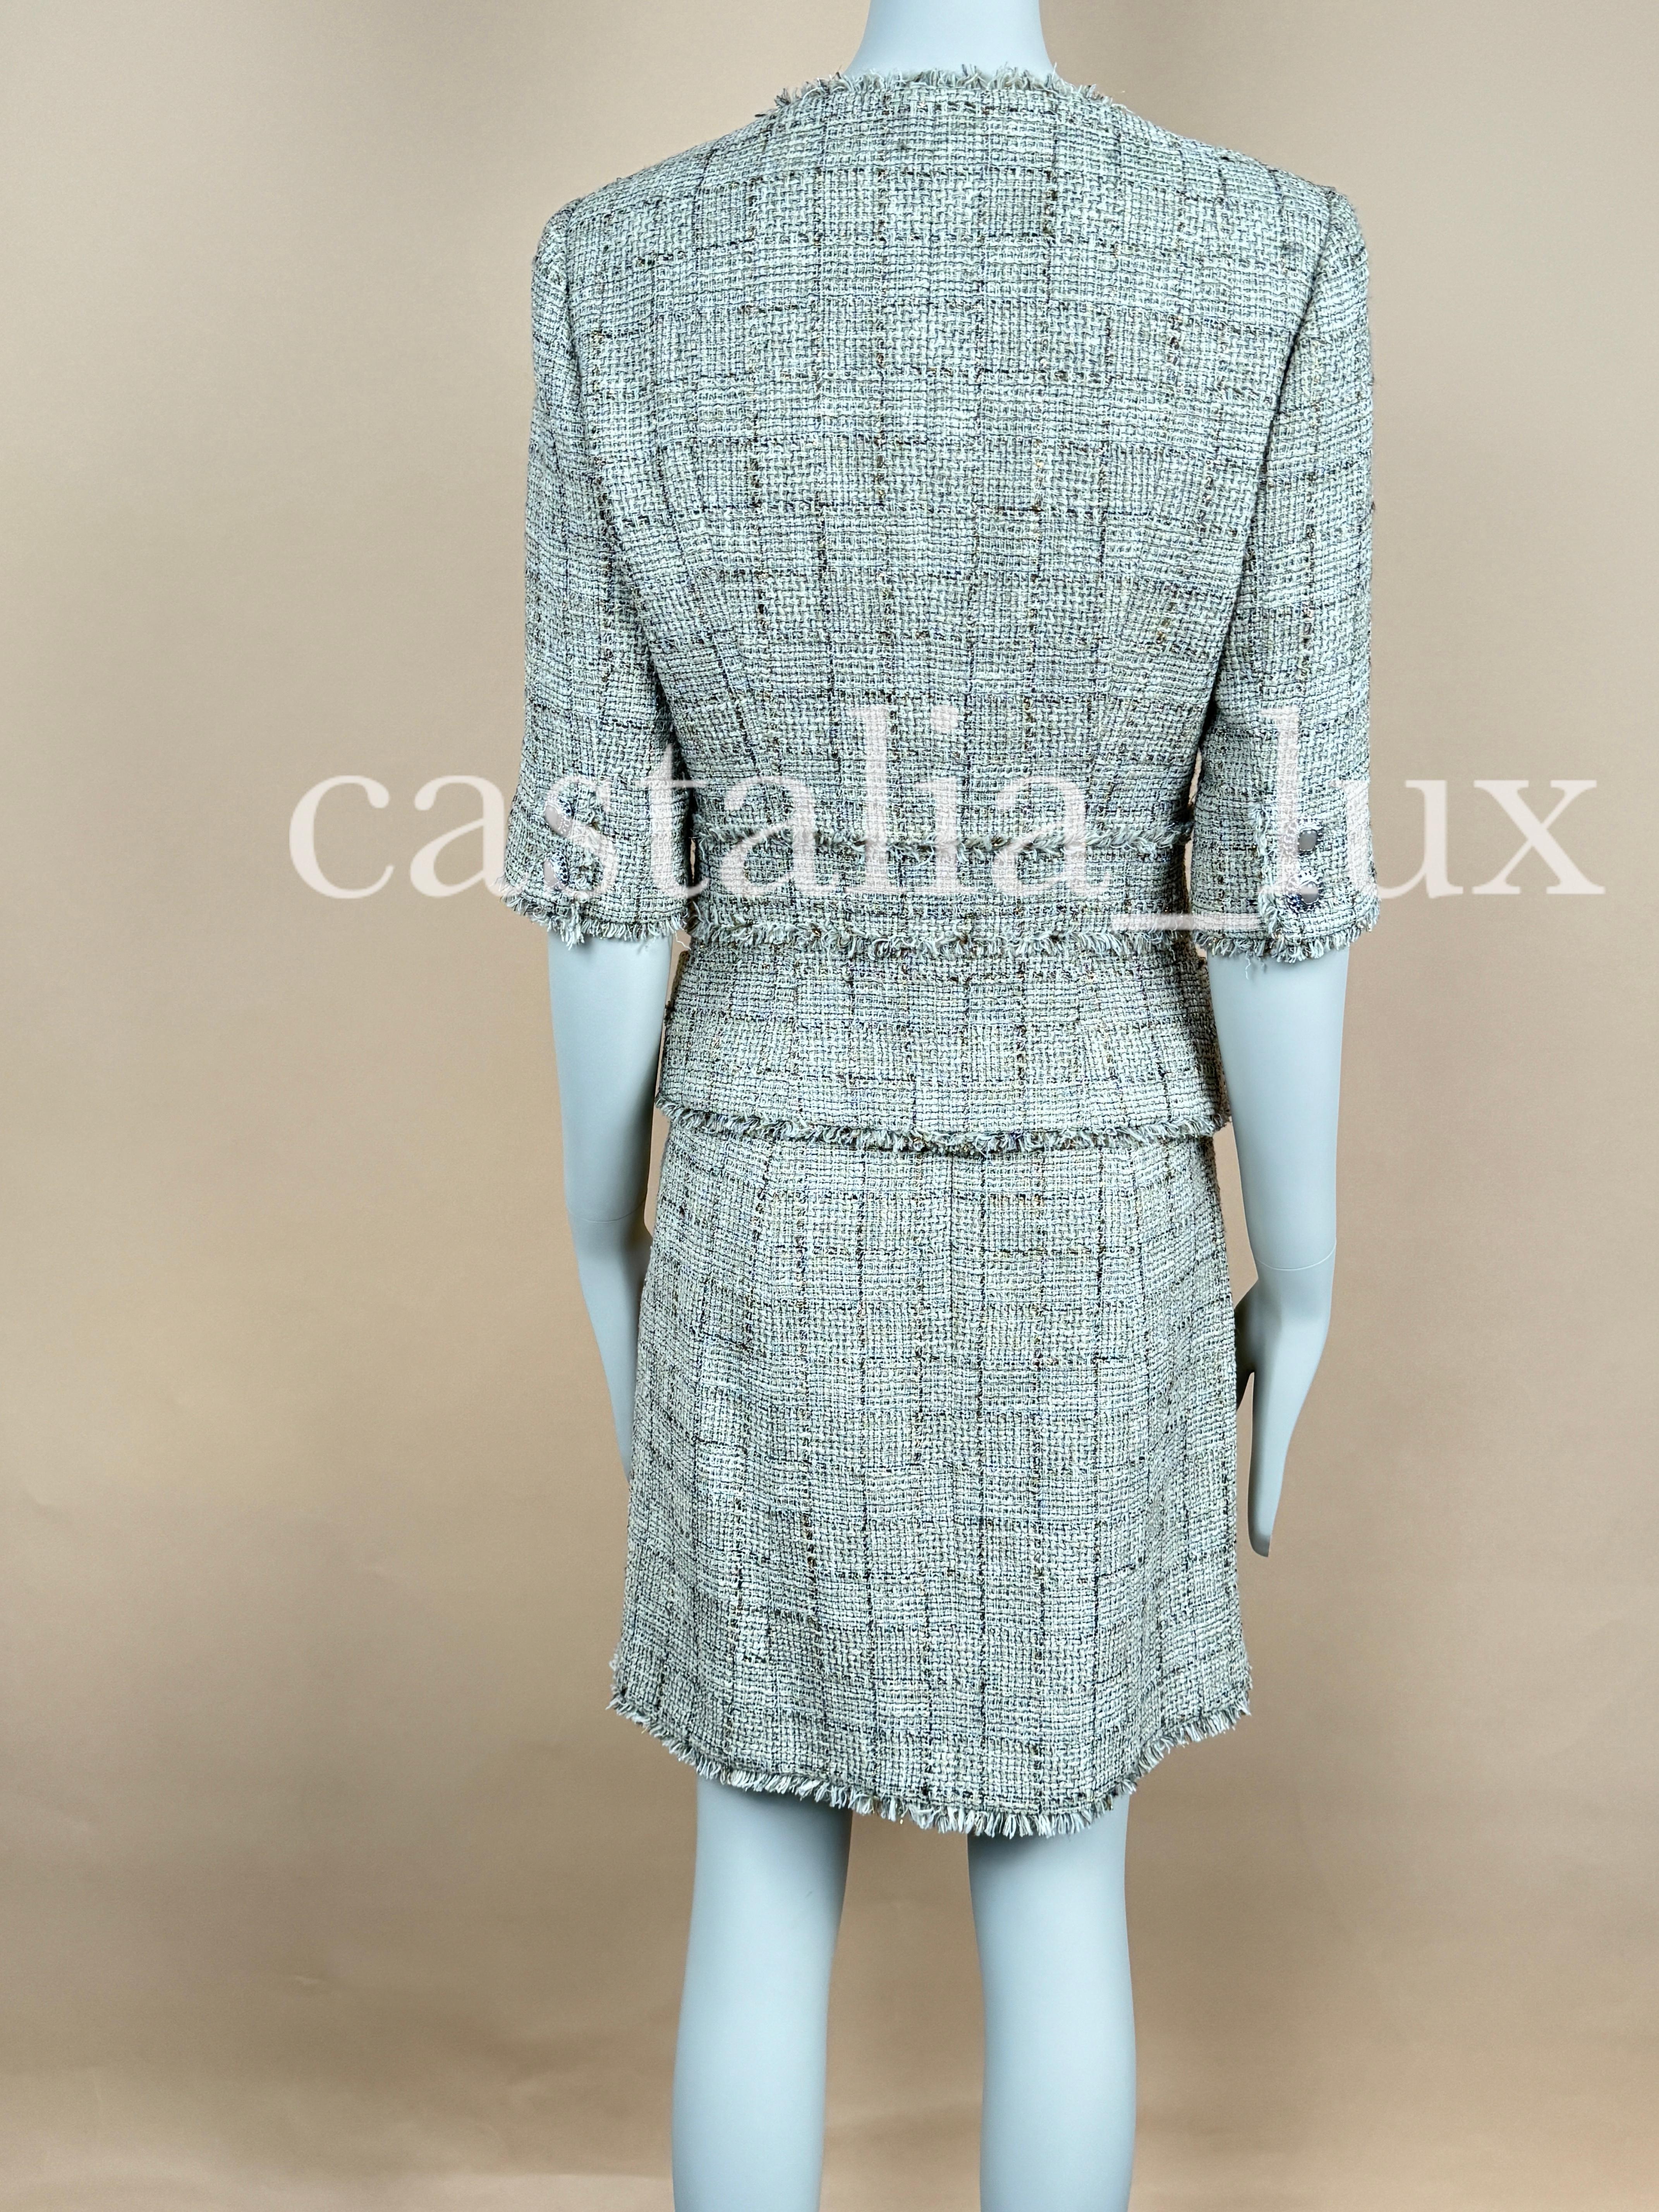 Chanel Gisele Bundchen Style Jewel Buttons Tweed Suit For Sale 13